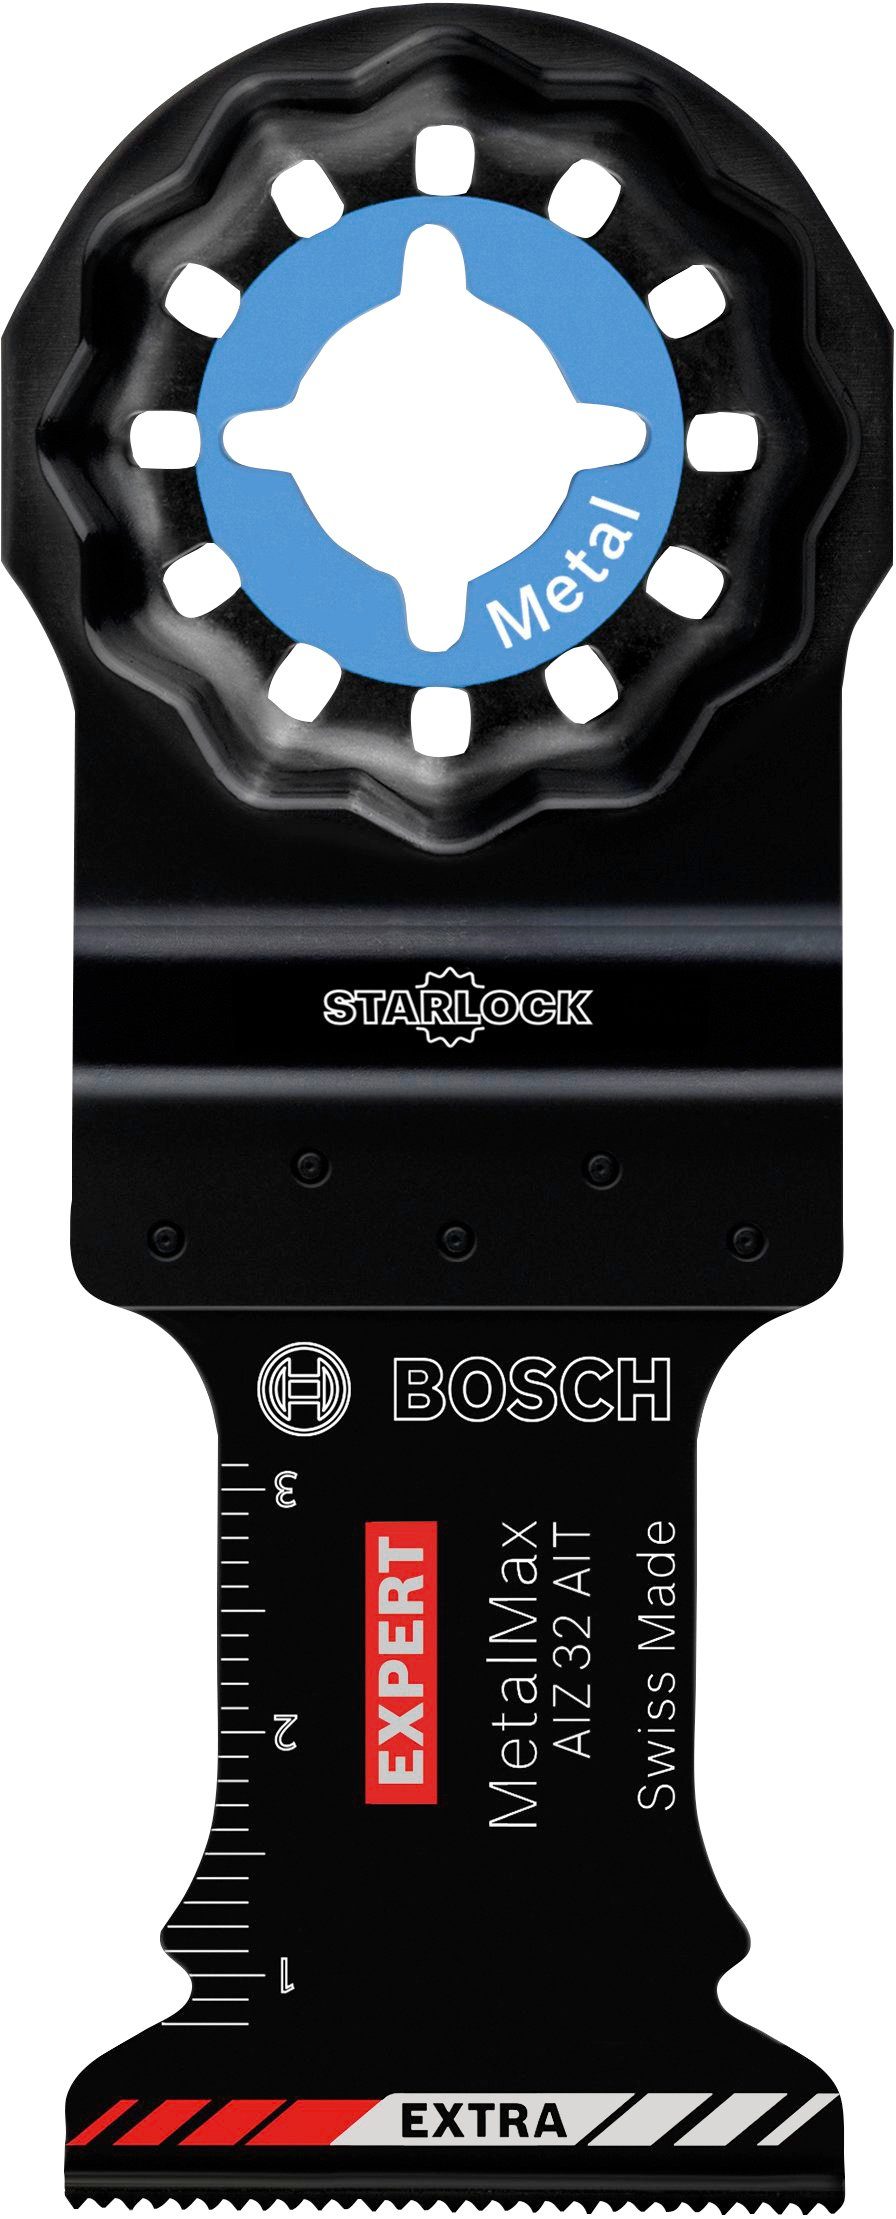 Bosch Professional Sägeblatt EXPERT MetalMax AIT x (Set, 10-St), Multifunktionswerkzeuge 32 für 40 mm, 32 AIZ